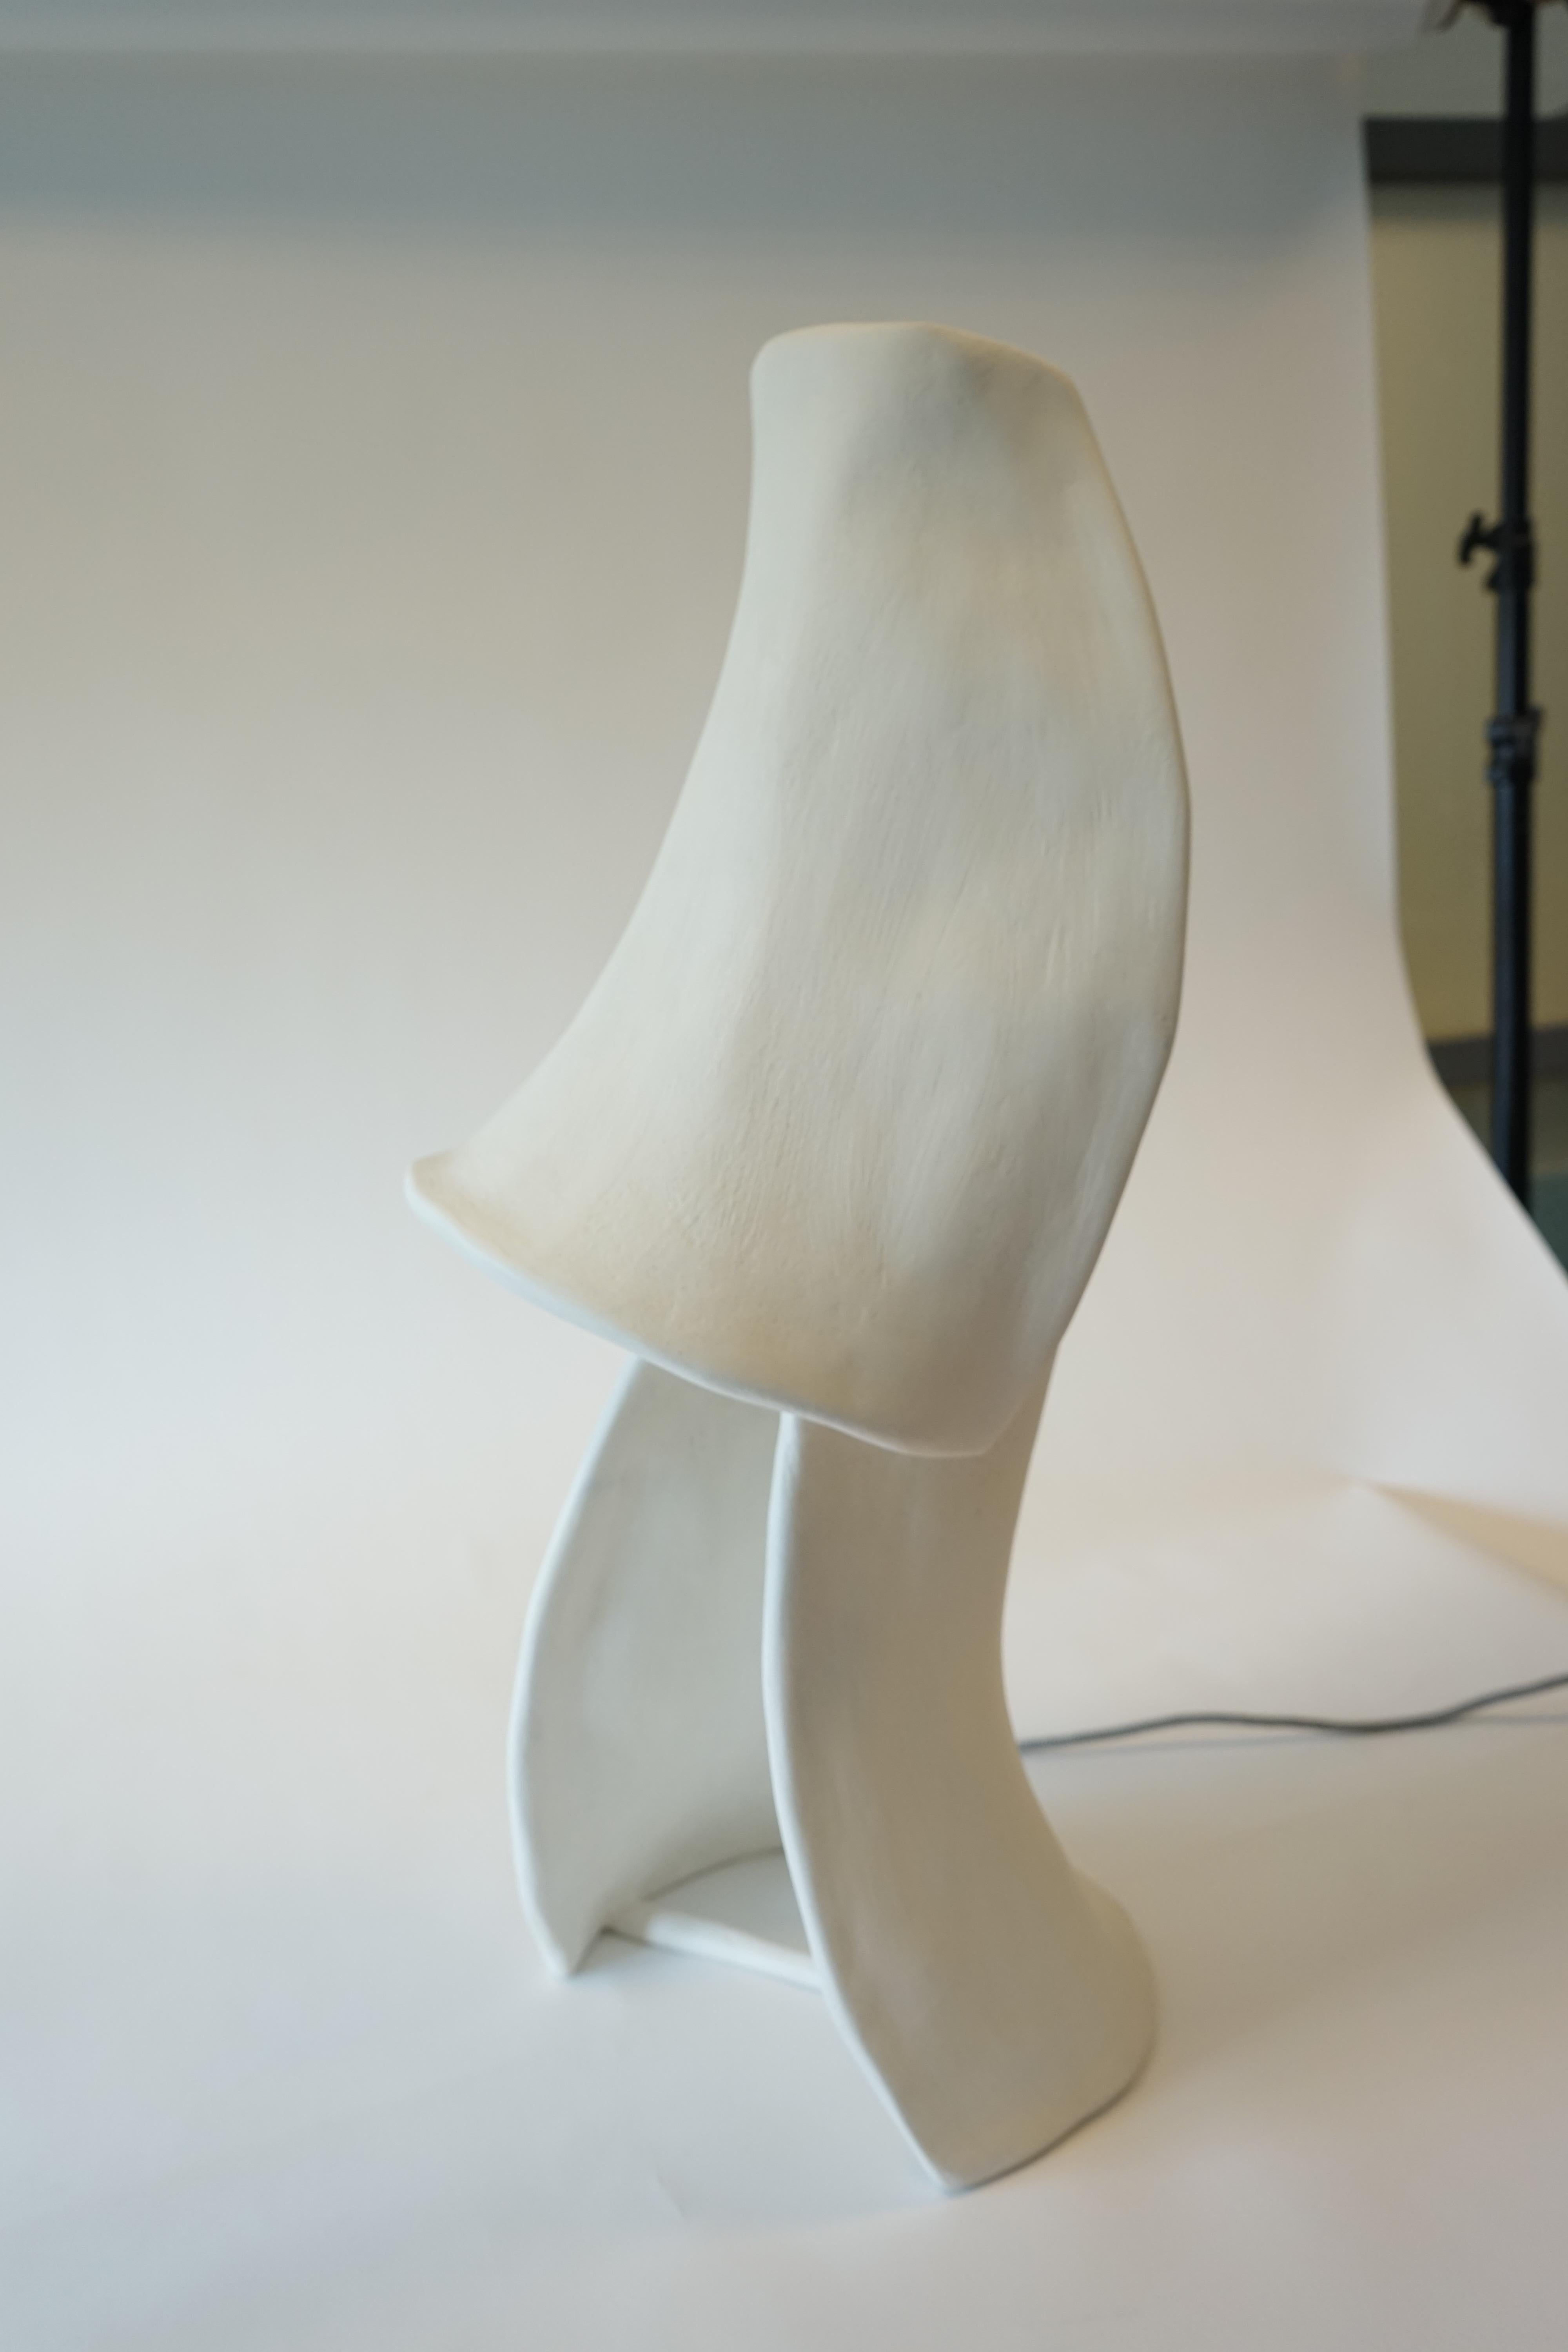 Steel Contemporary Design White Textured Curved Sculptures Lamp by Jordan van der Ven For Sale